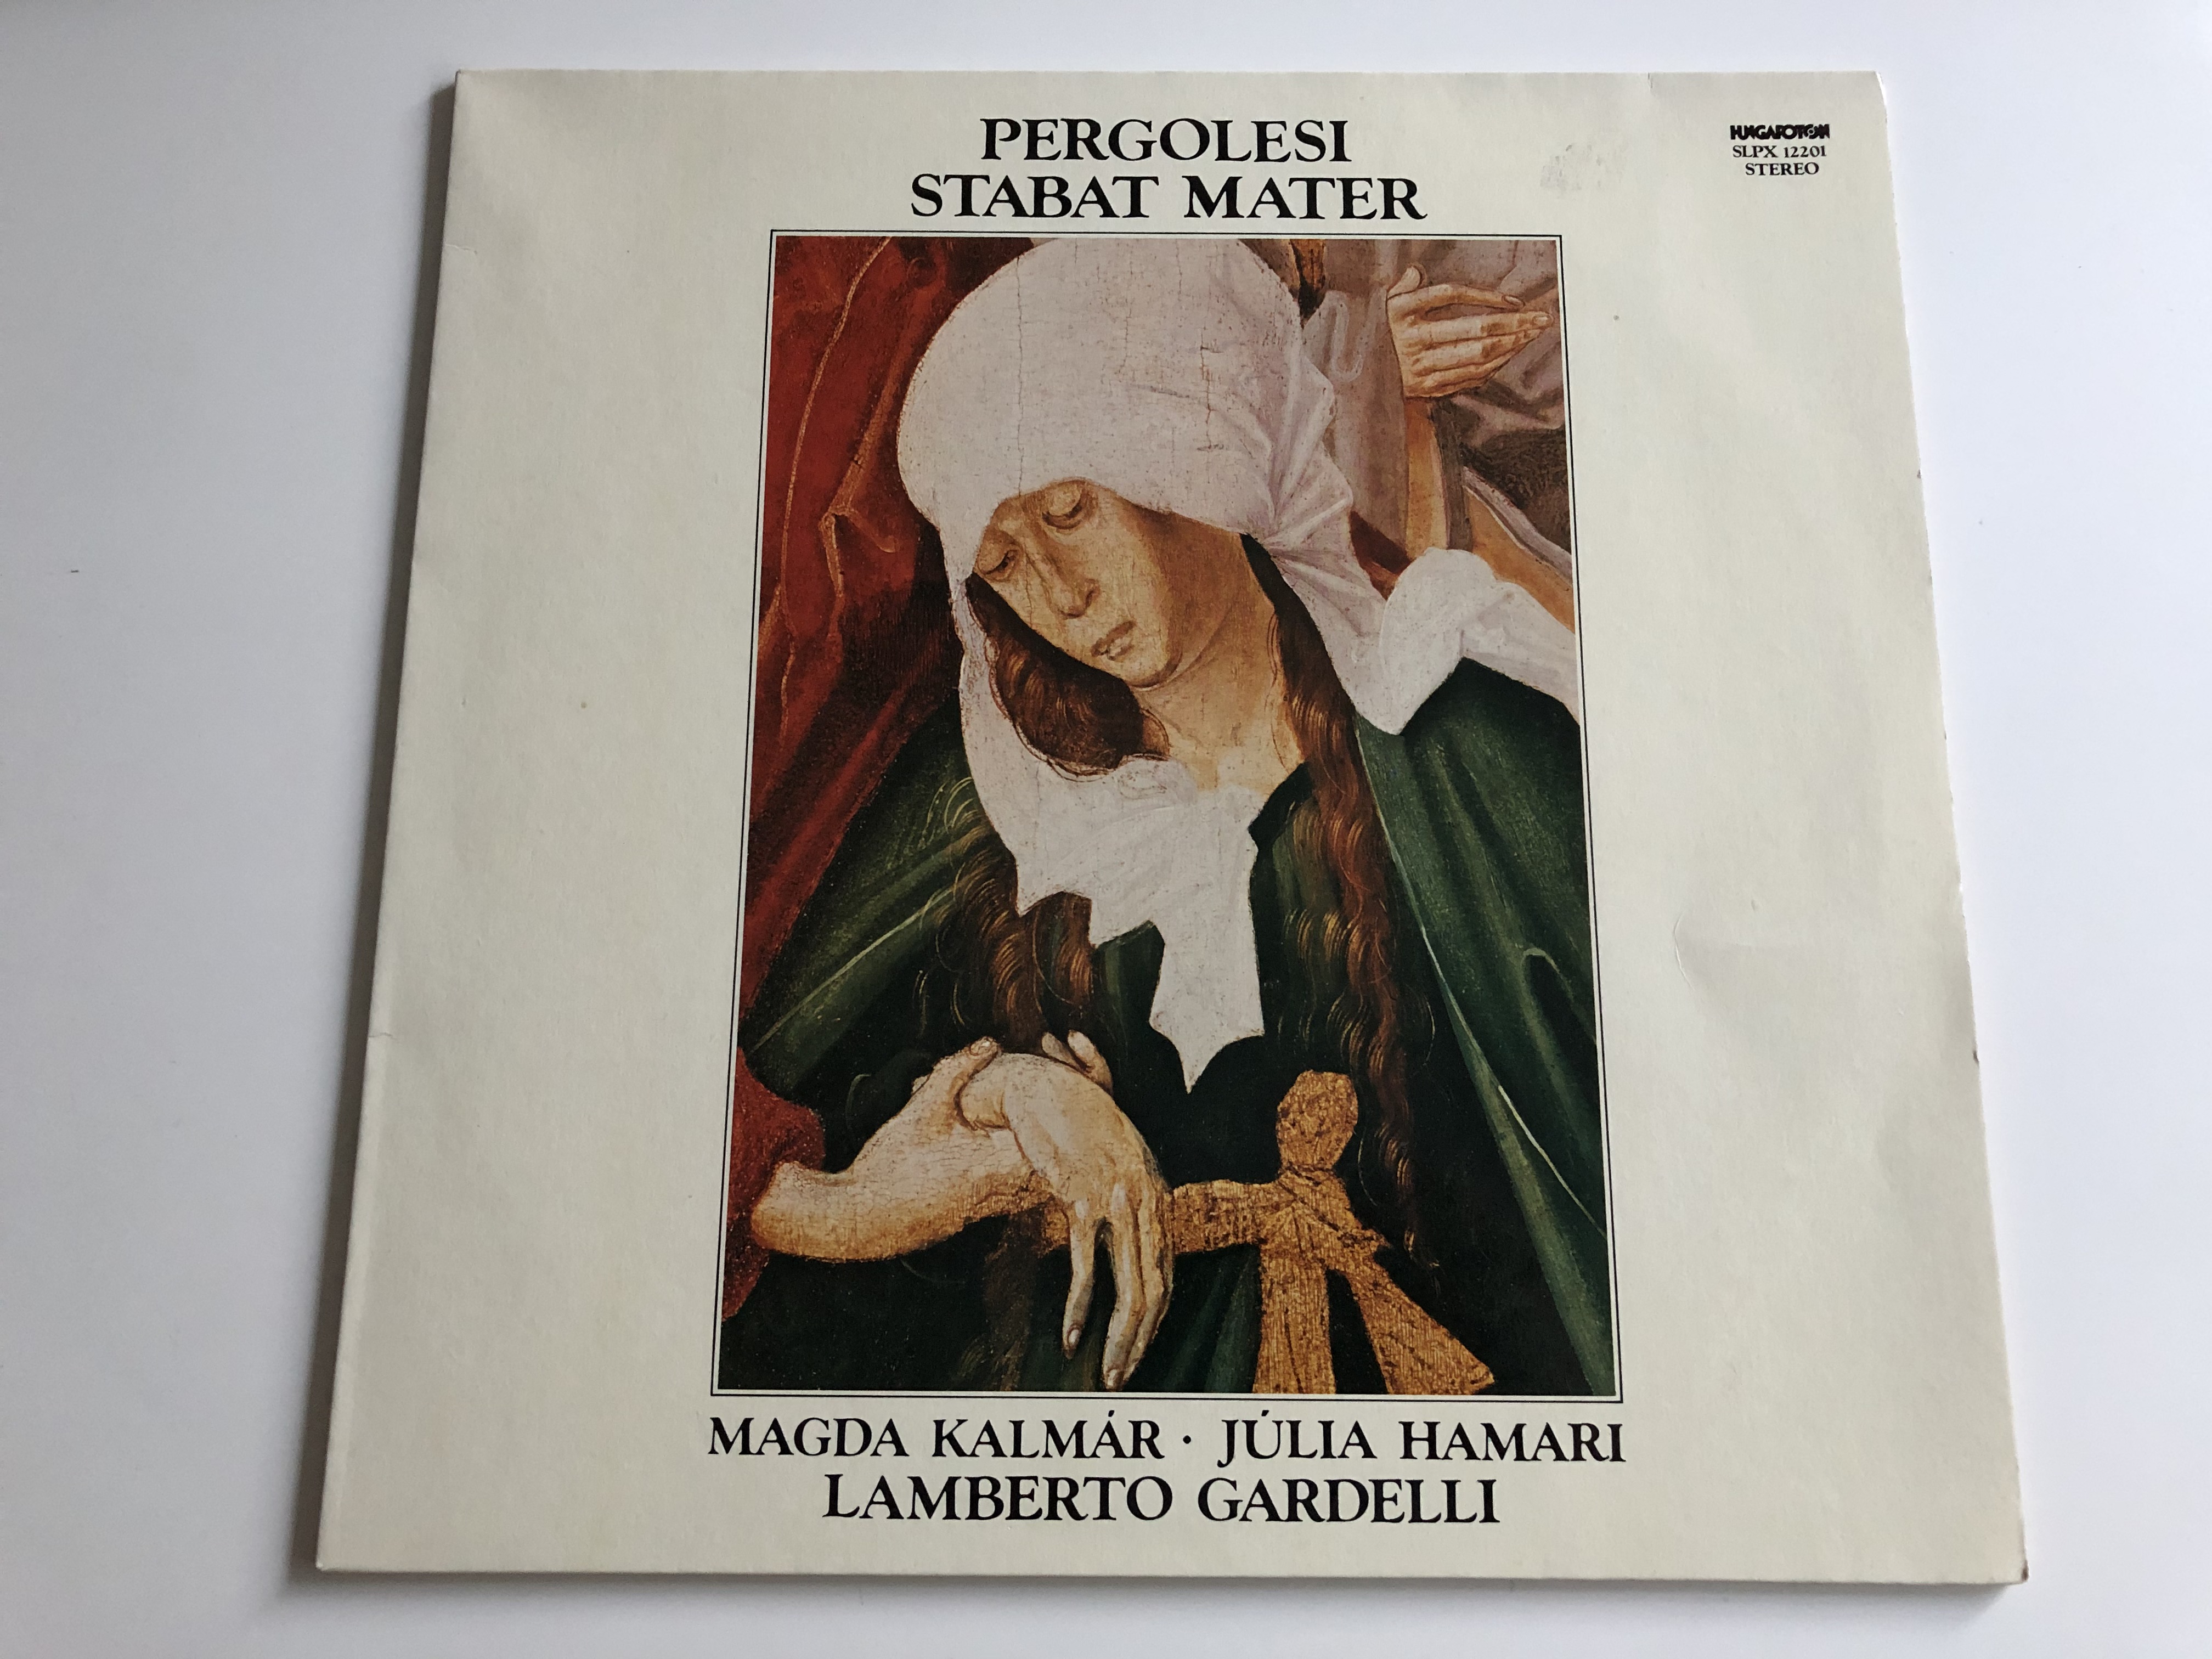 pergolesi-stabat-mater-magda-kalm-r-j-lia-hamari-conducted-lamberto-gardelli-hungaroton-lp-stereo-slpx-12201-1-.jpg